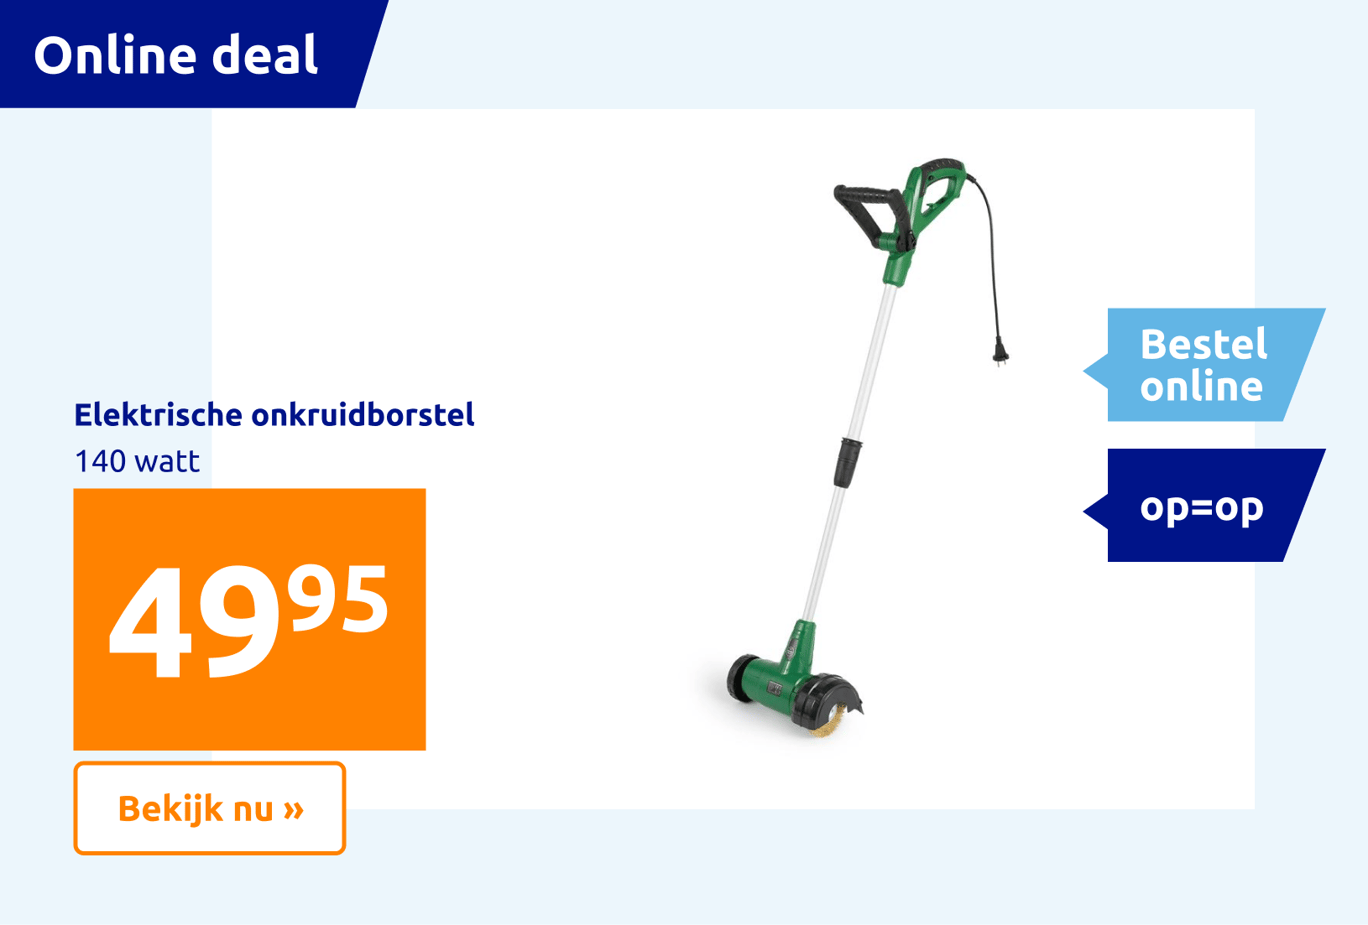 https://shop.action.com/nl-nl/p/8720604883053/elektrische-onkruidborstel